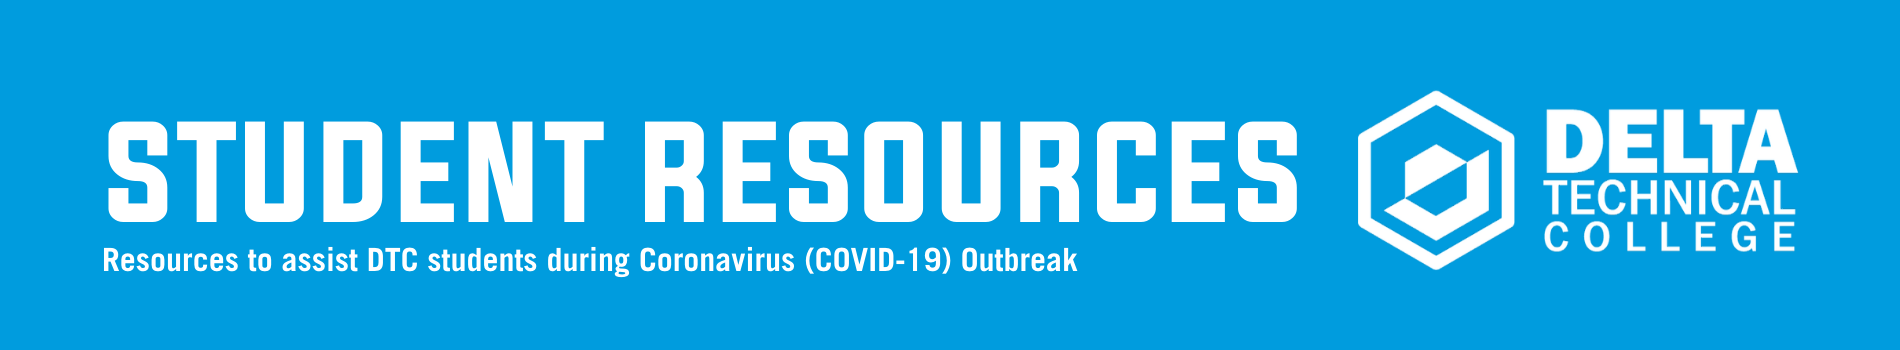 dtc student resources coronavirus